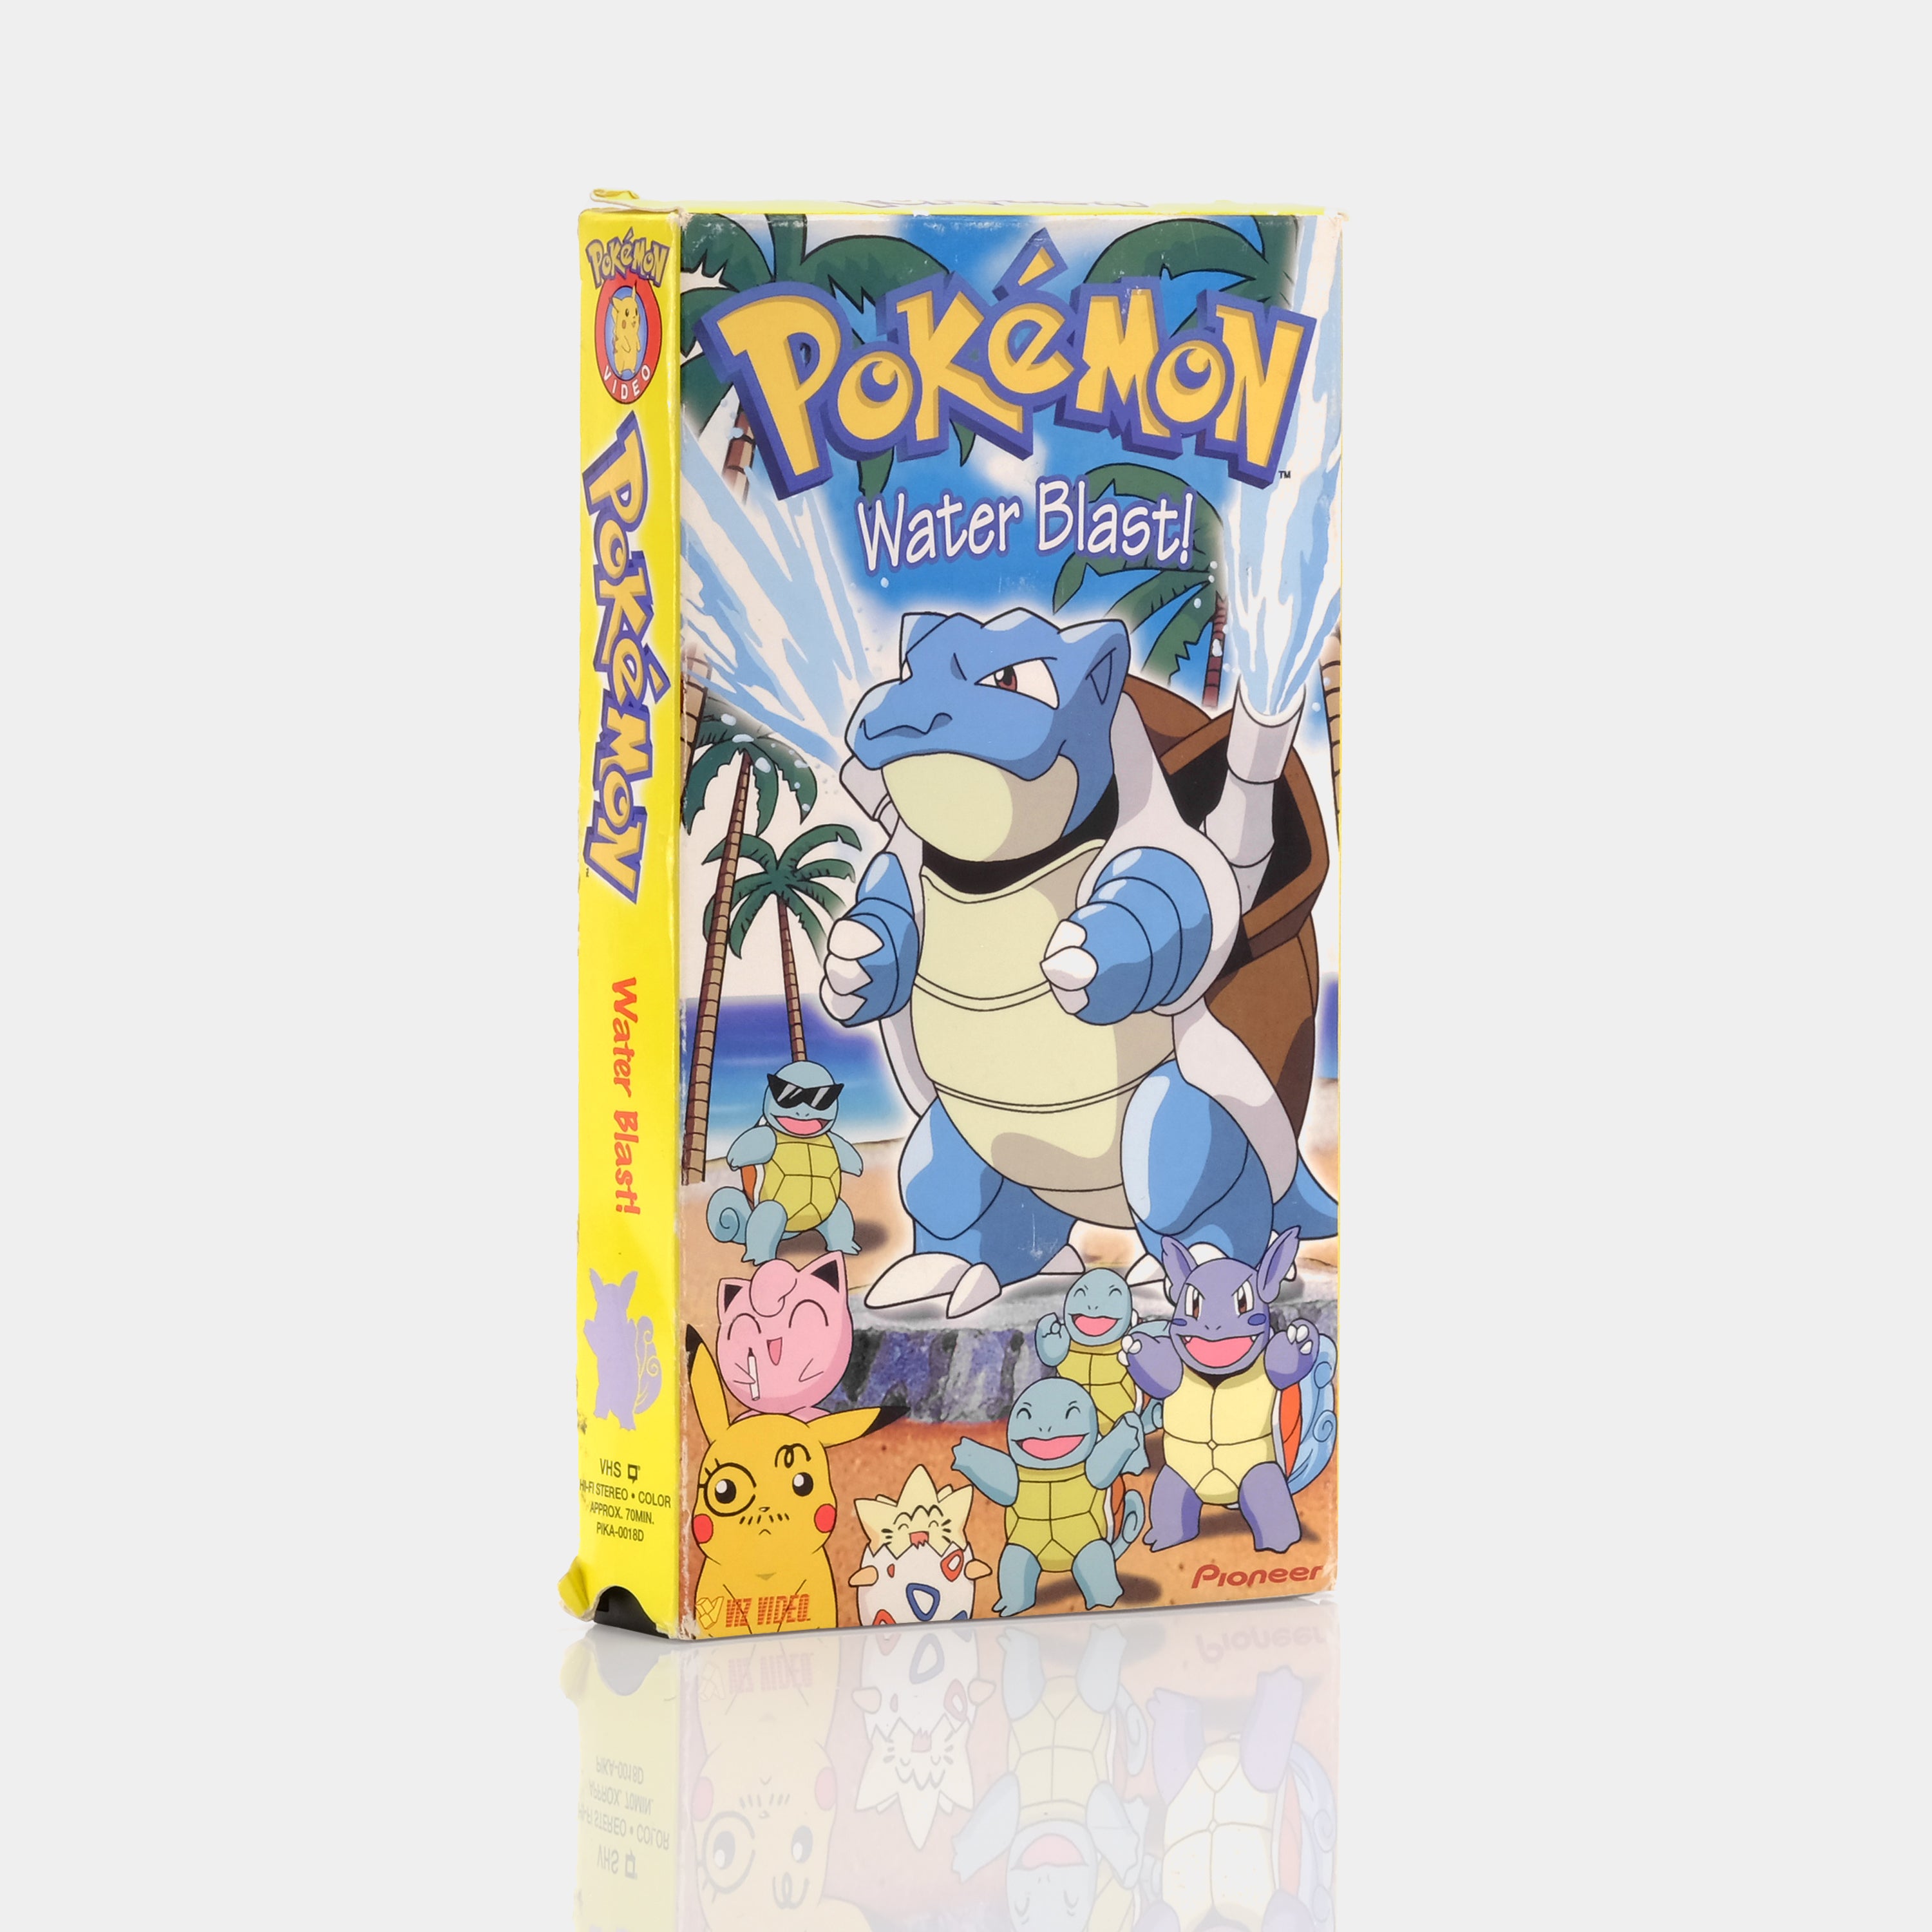 Pokémon: Water Blast! VHS Tape